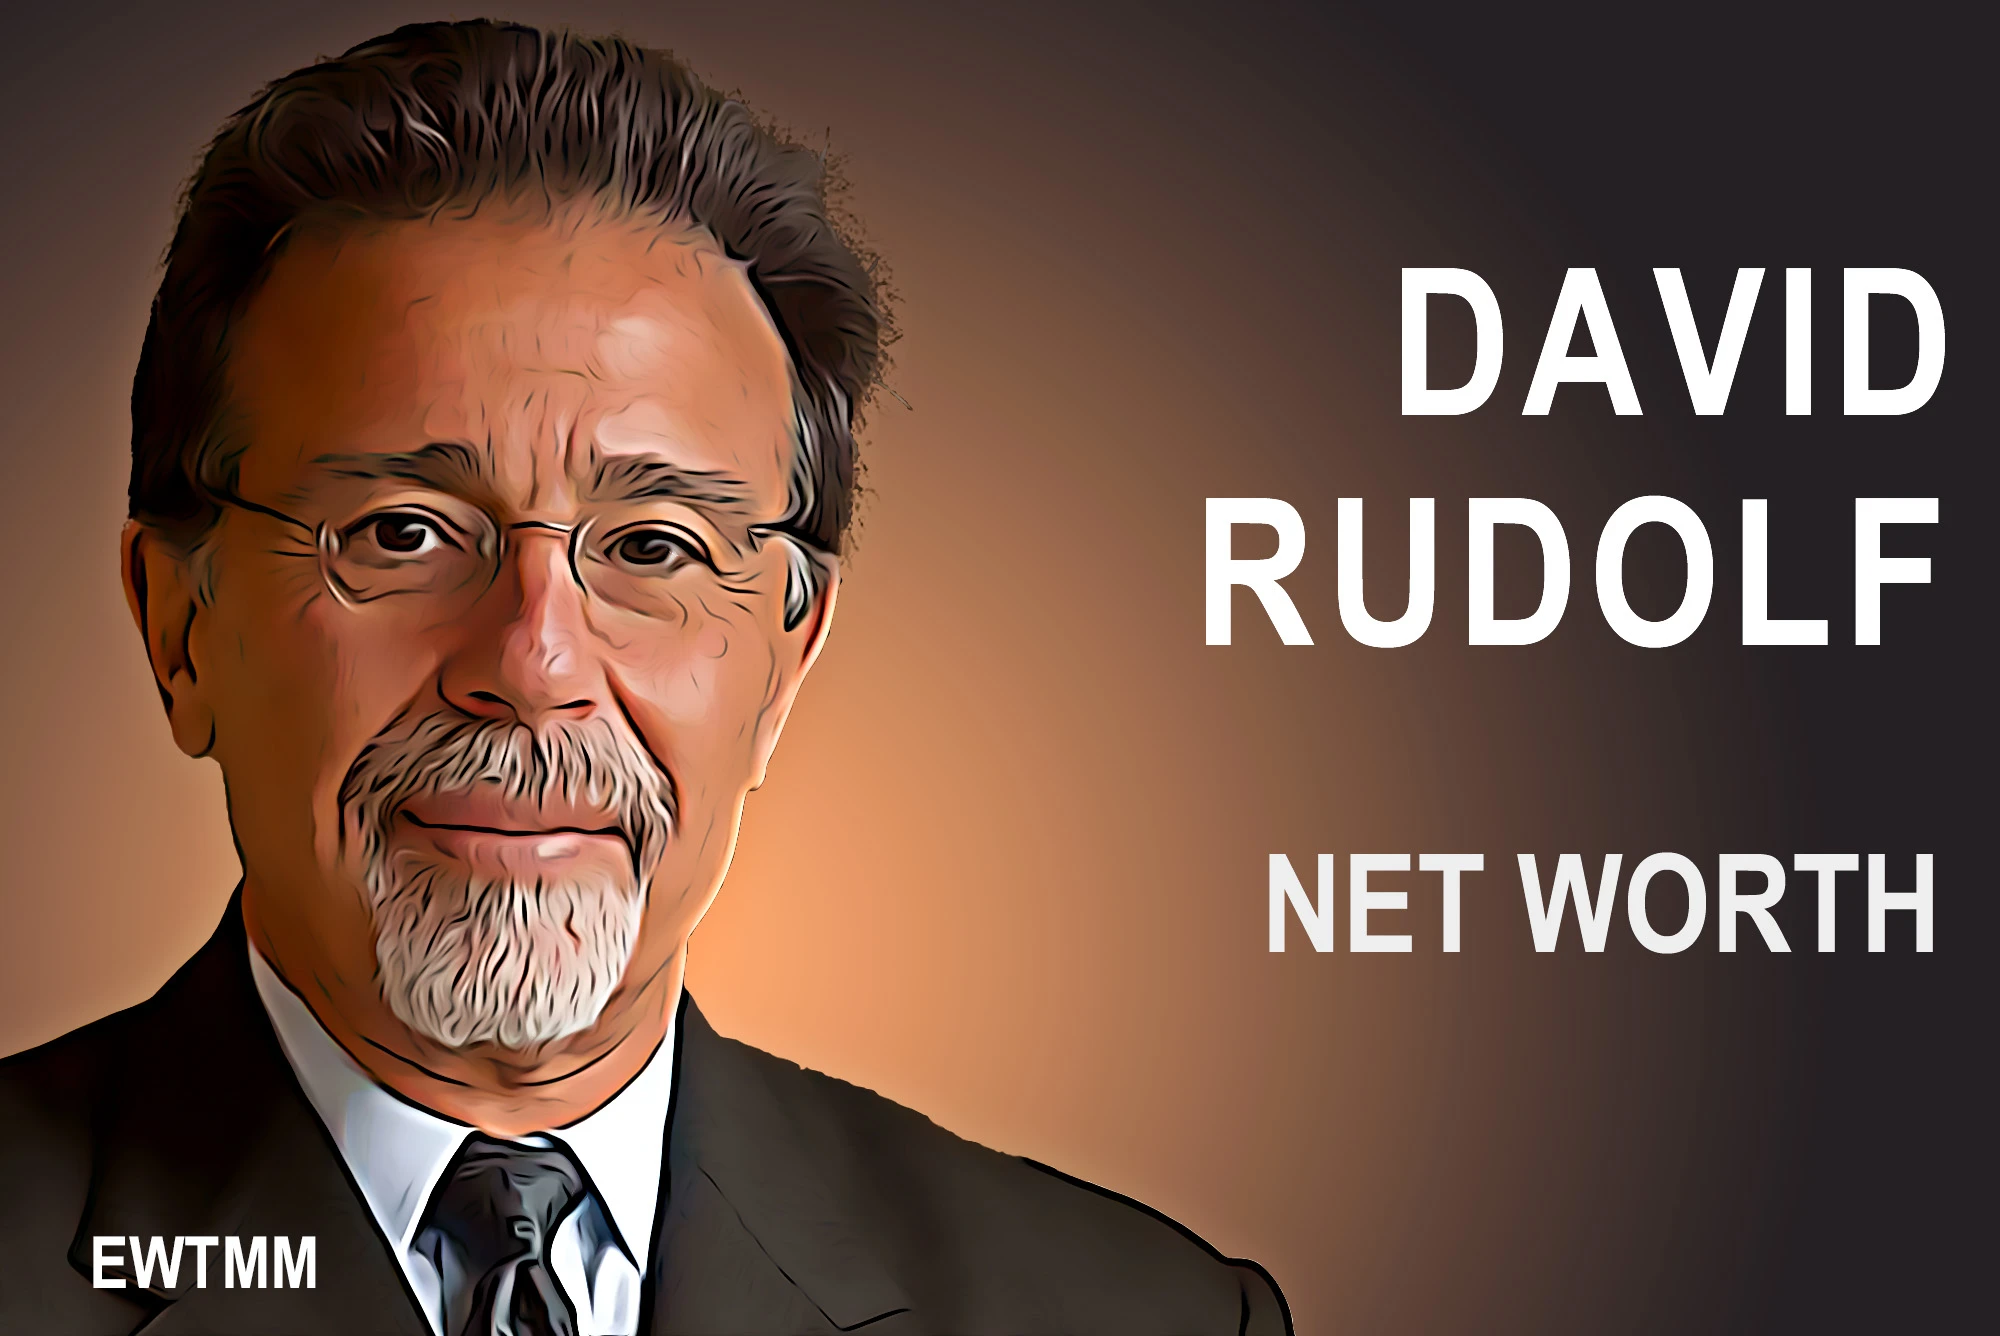 David Rudlof net worth